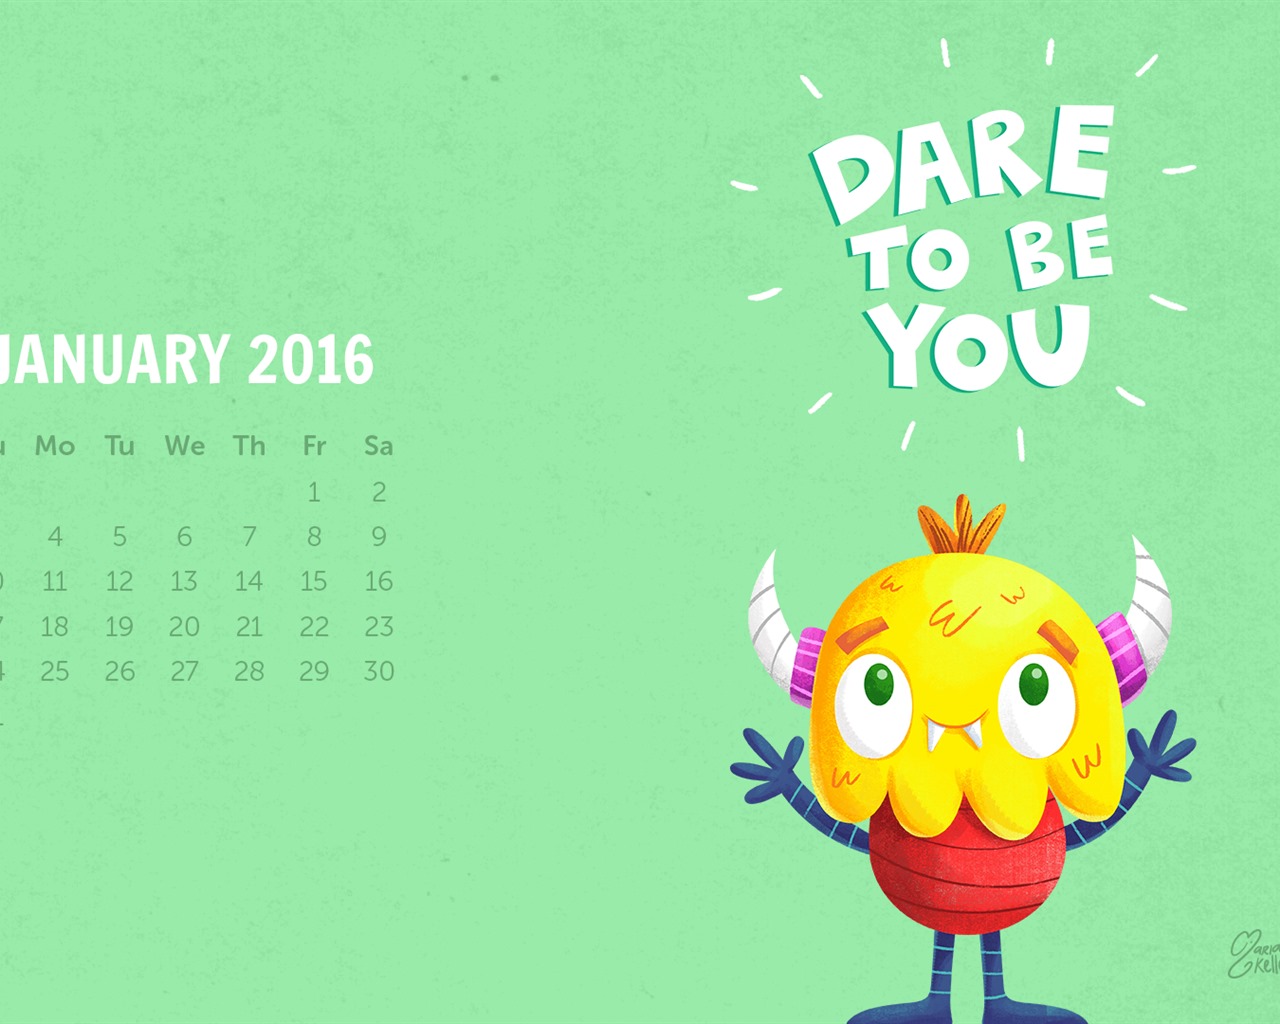 January 2016 calendar wallpaper (2) #9 - 1280x1024